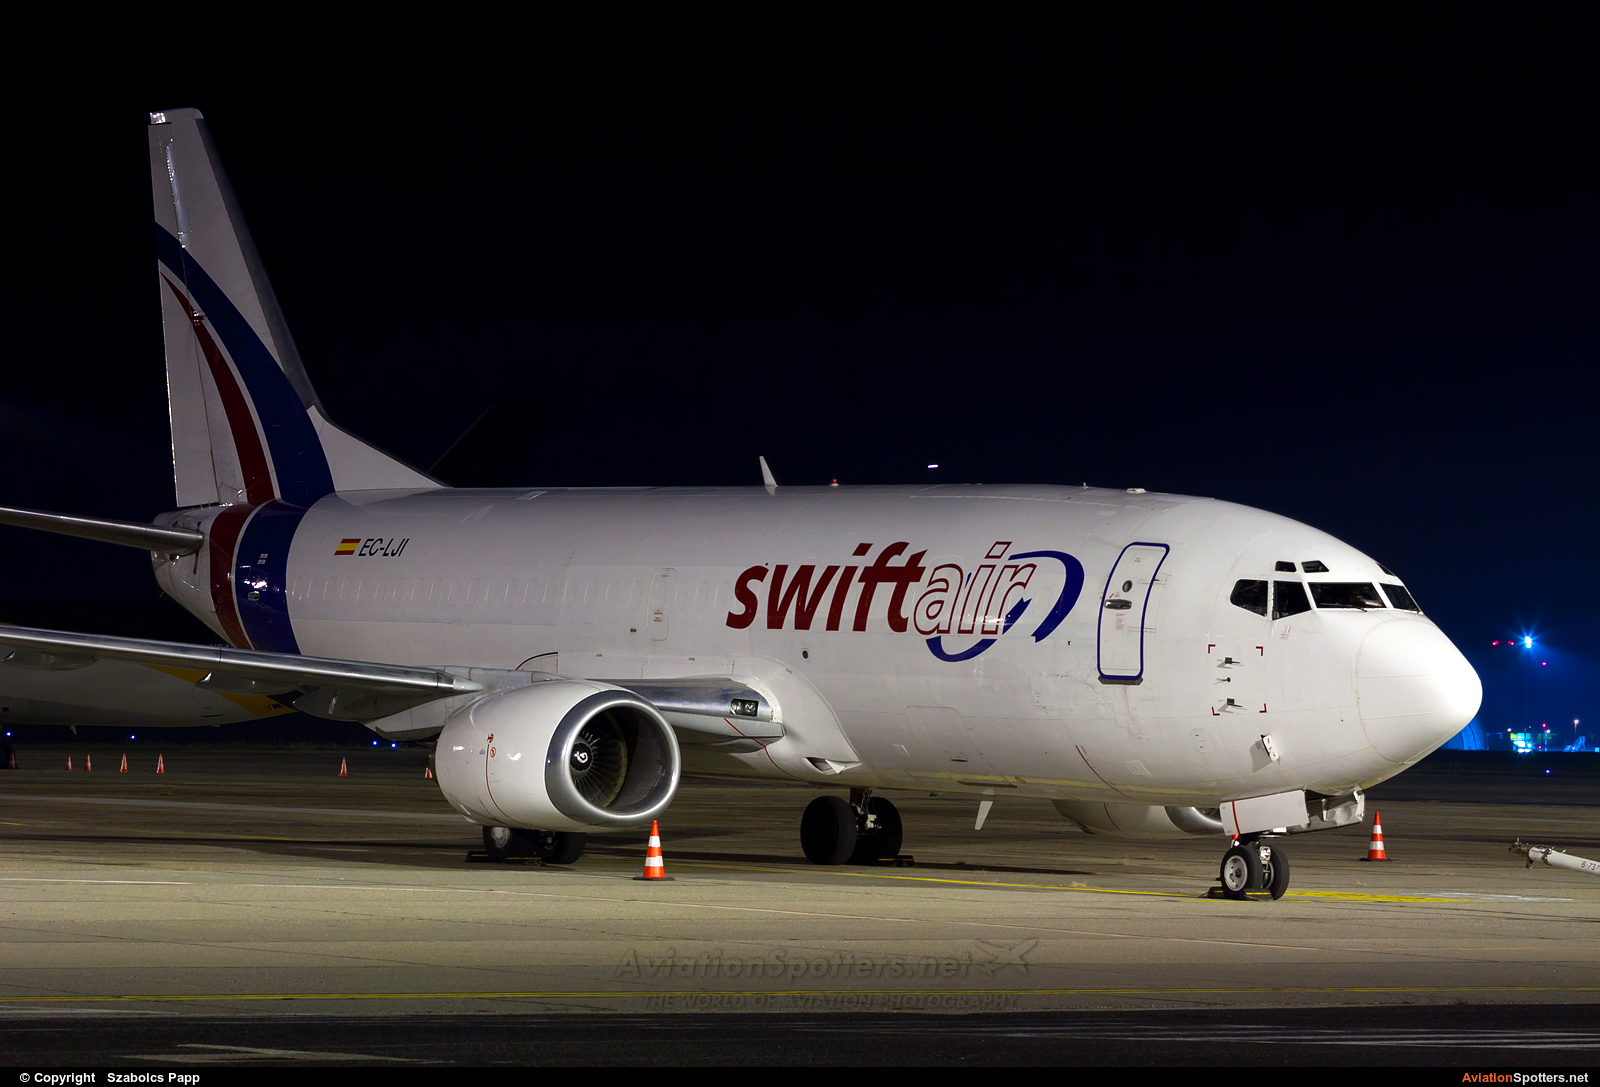 Swiftair  -  737-300F  (EC-LJI) By Szabolcs Papp (mr.szabi)